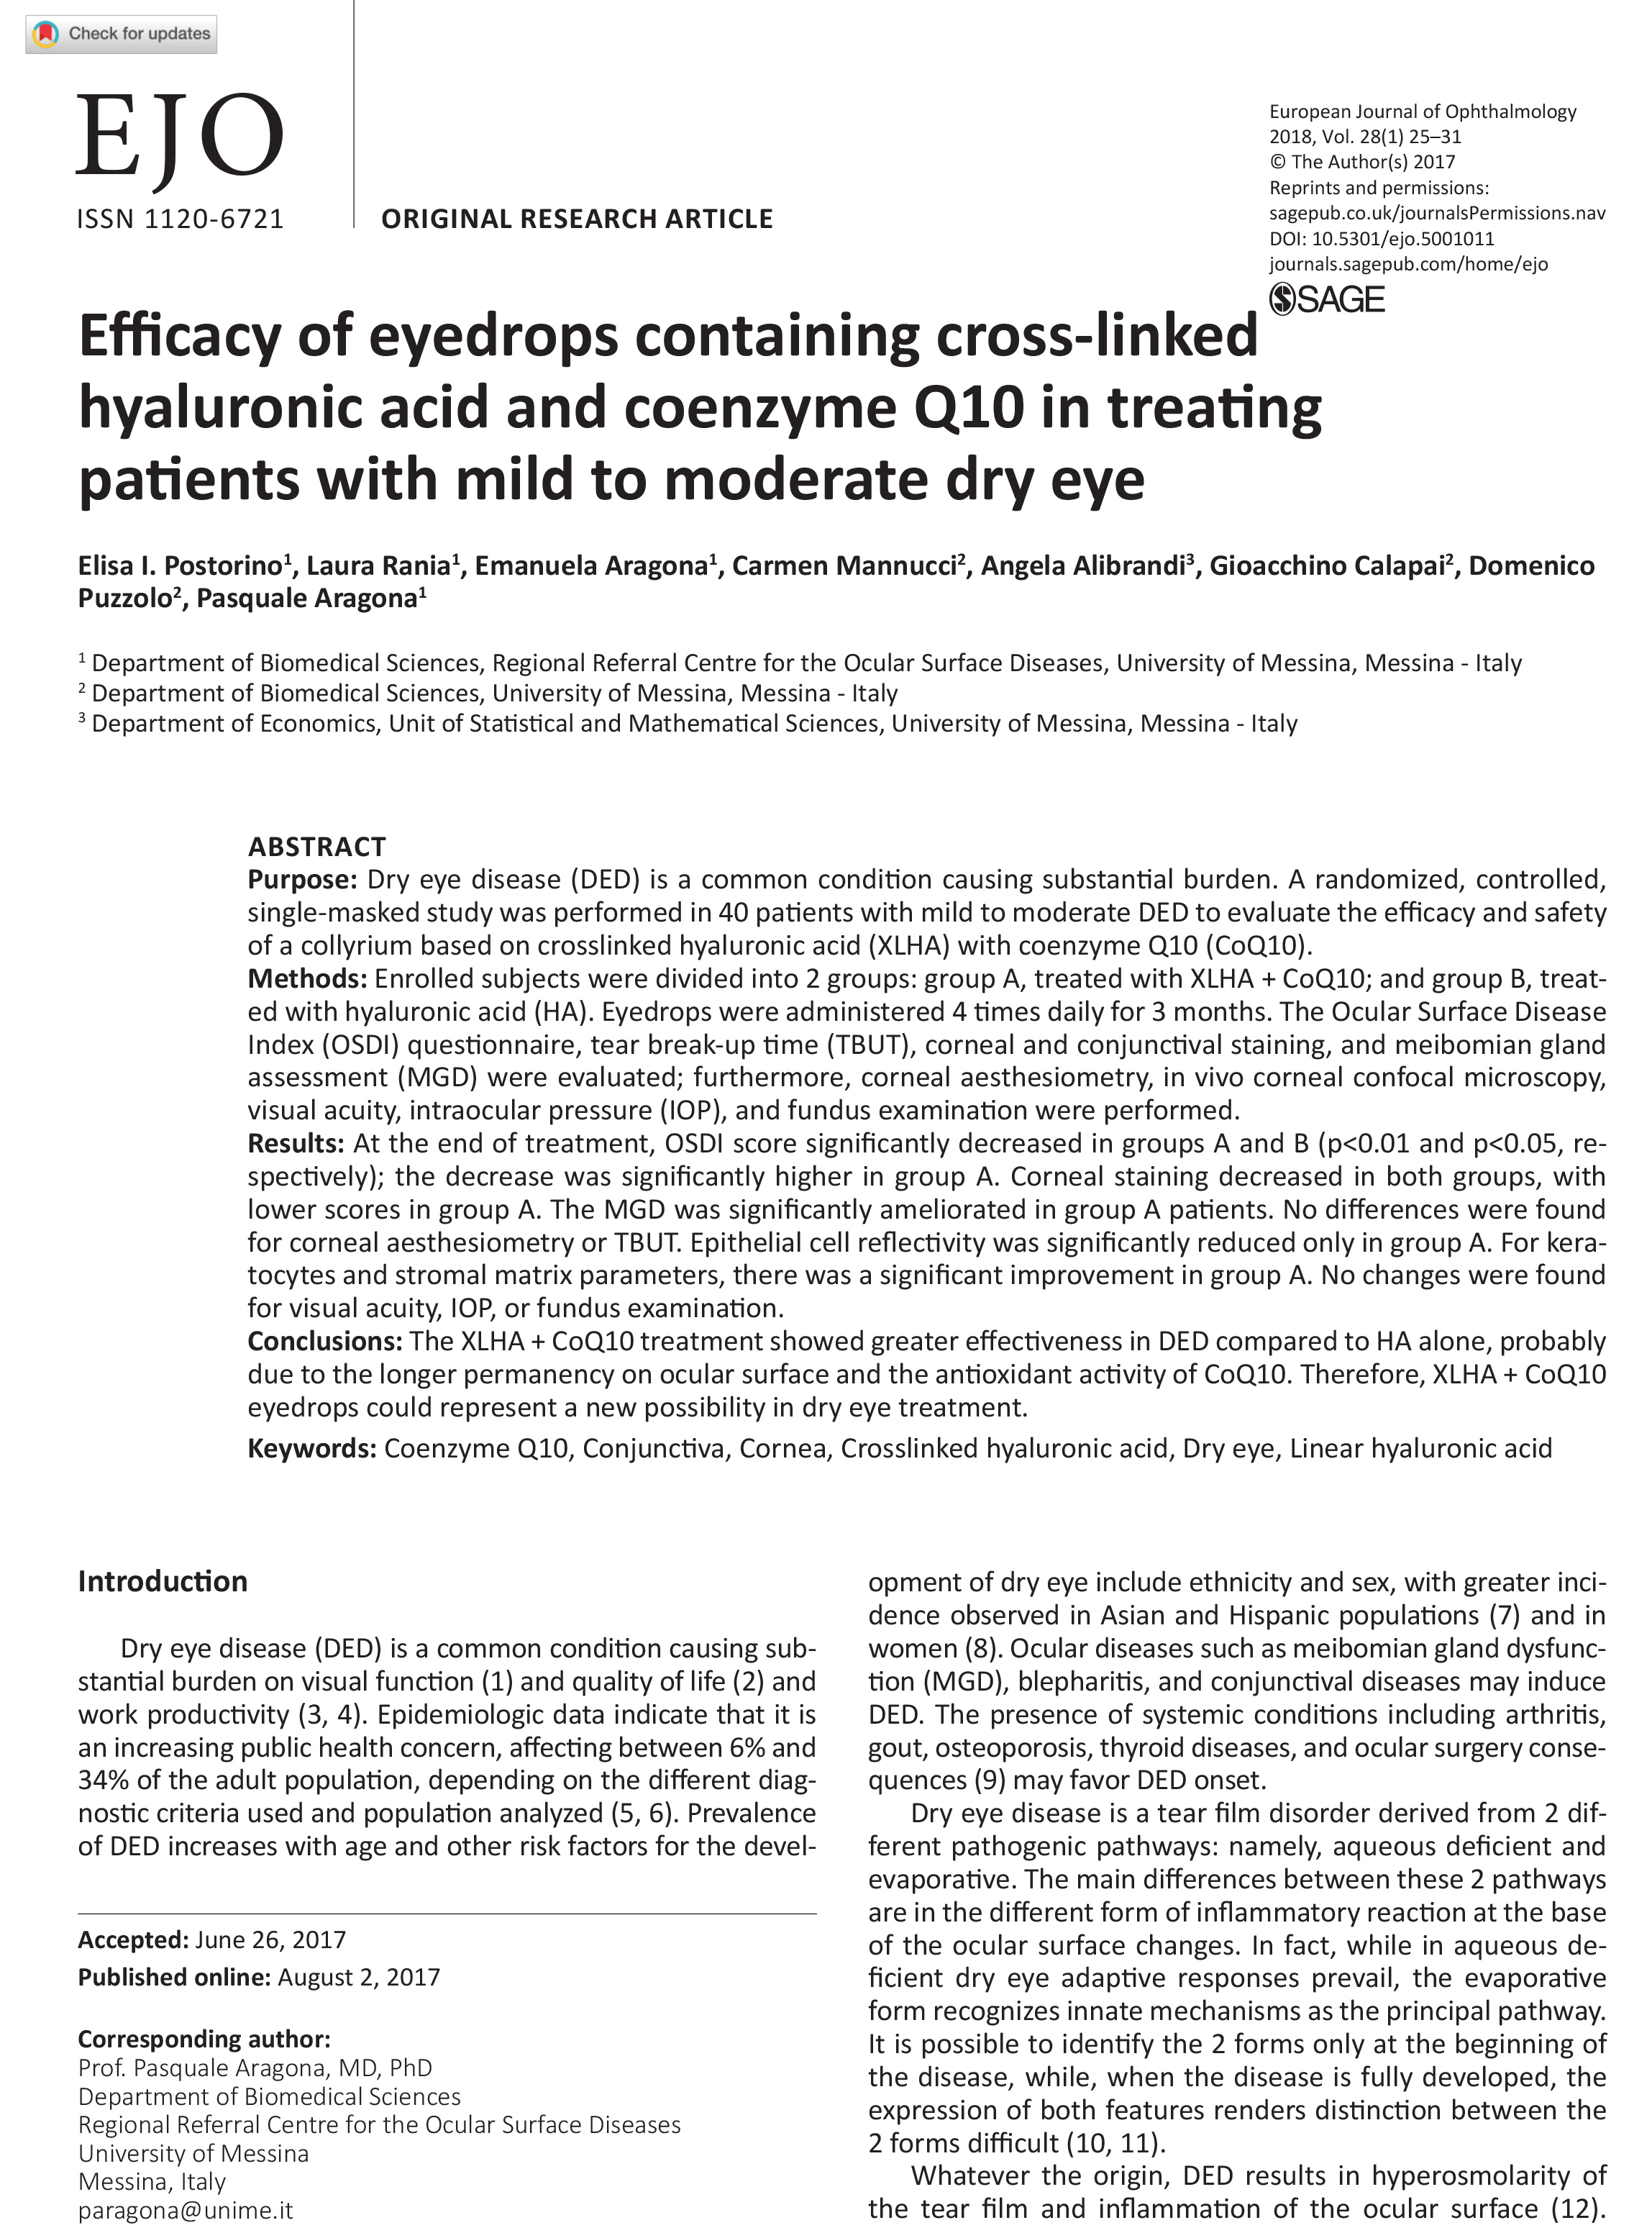 Efficacy_of_eyedrops_containing_crosslinked_hyaluronic_acid-1.jpg